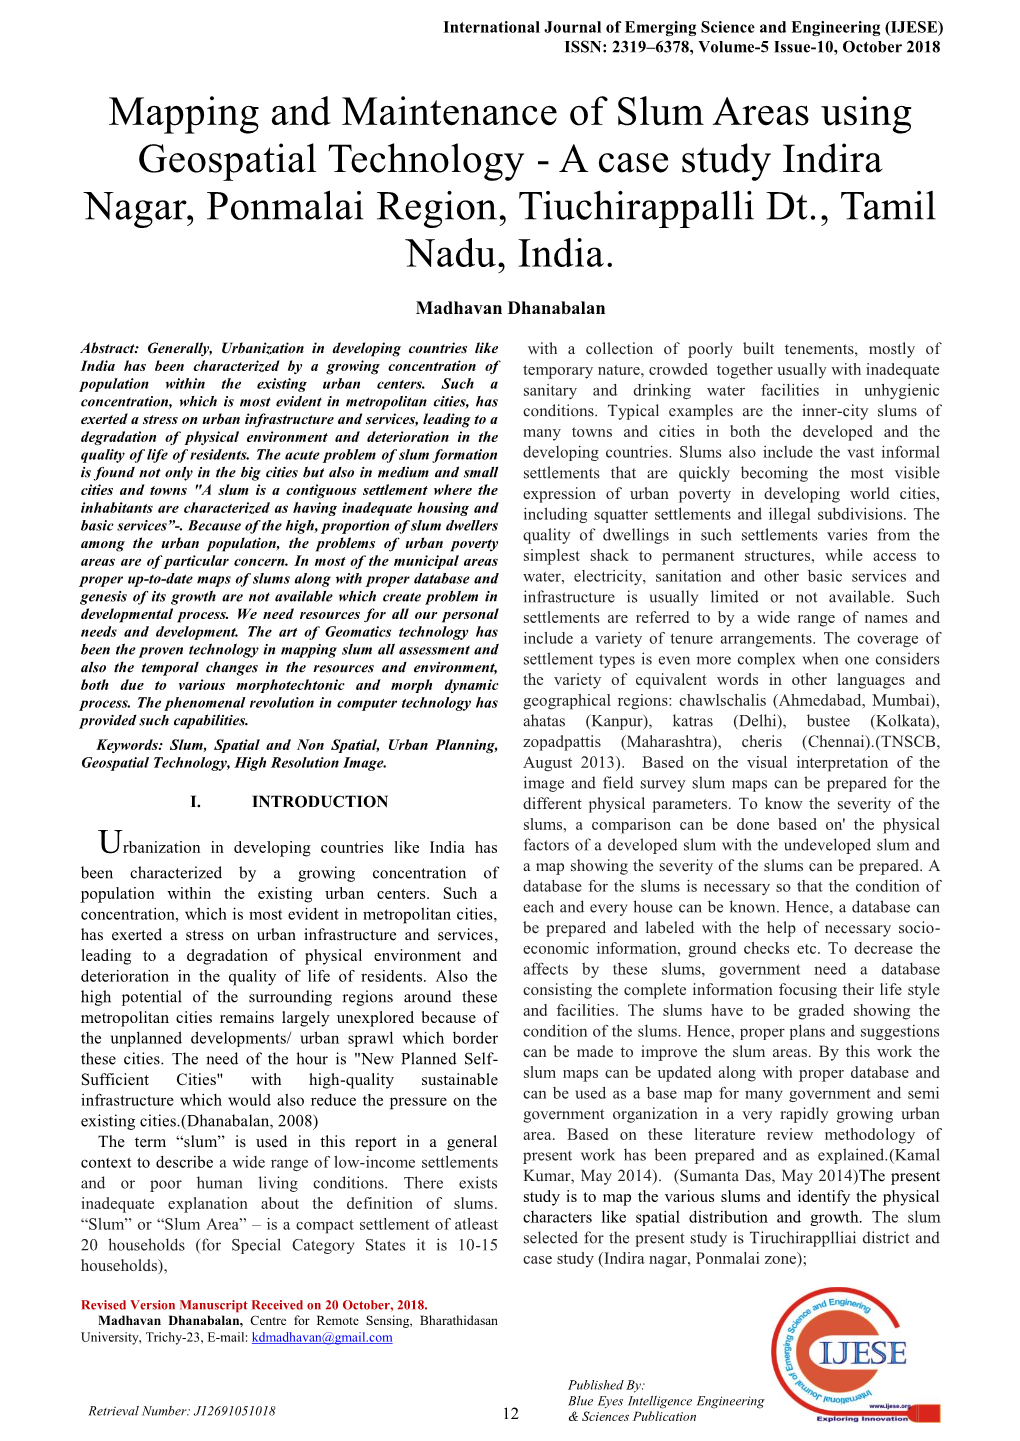 Mapping and Maintenance of Slum Areas Using Geospatial Technology - a Case Study Indira Nagar, Ponmalai Region, Tiuchirappalli Dt., Tamil Nadu, India